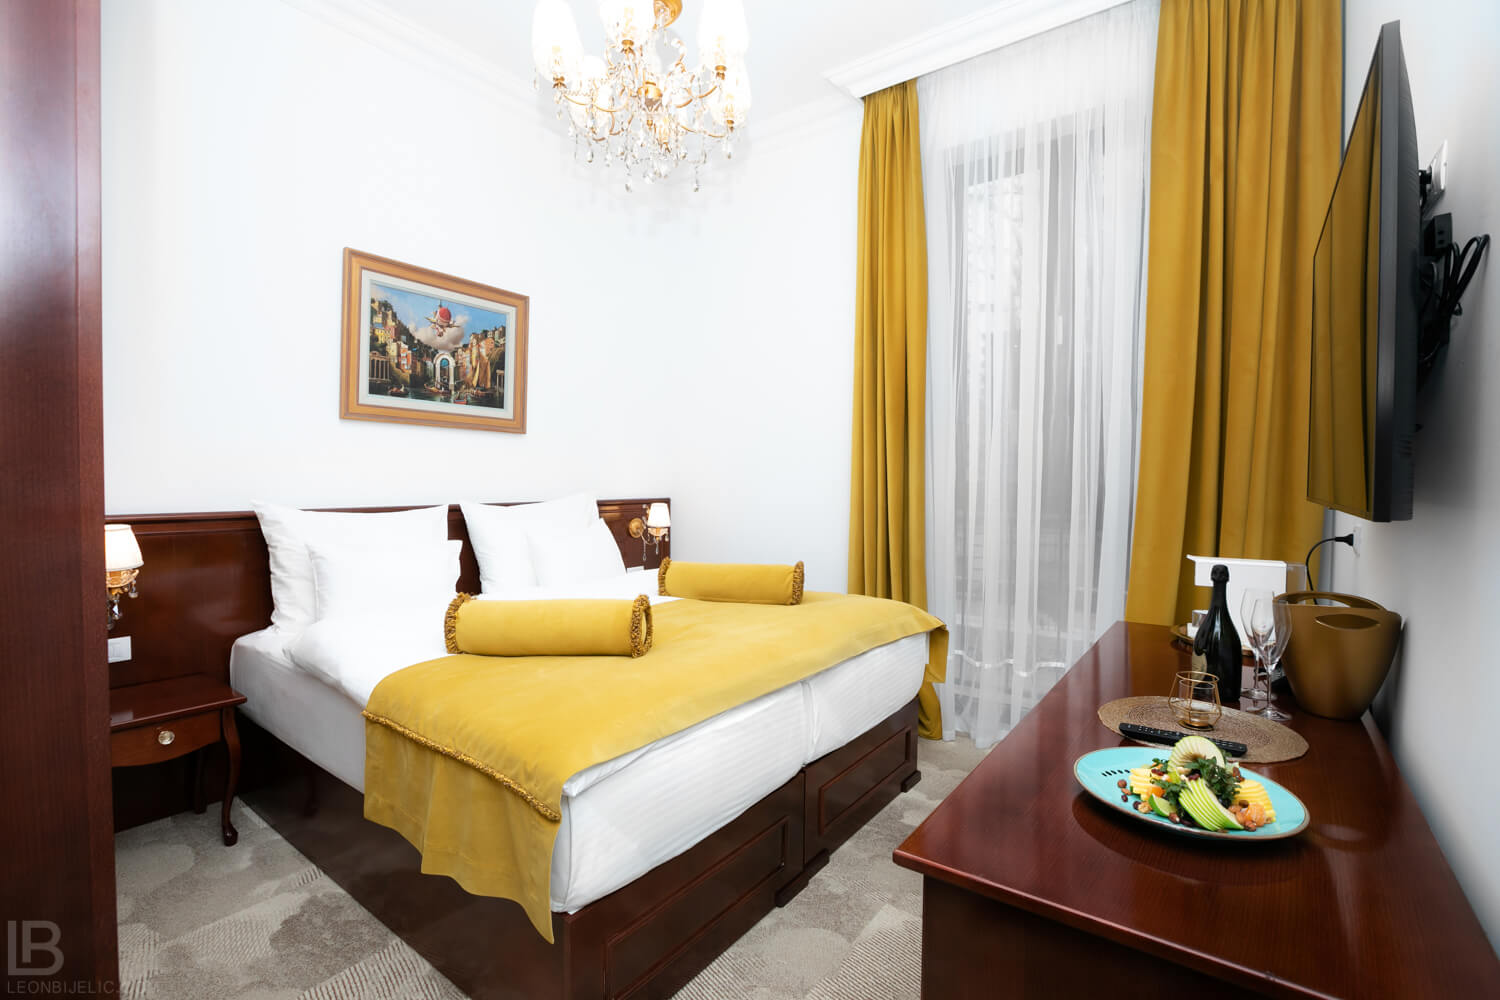 Hotel Integra - Deluxe Room - Luxury Accomodation - Photo Phtographer fotograf fotografjie i slike - Leon Bijelic